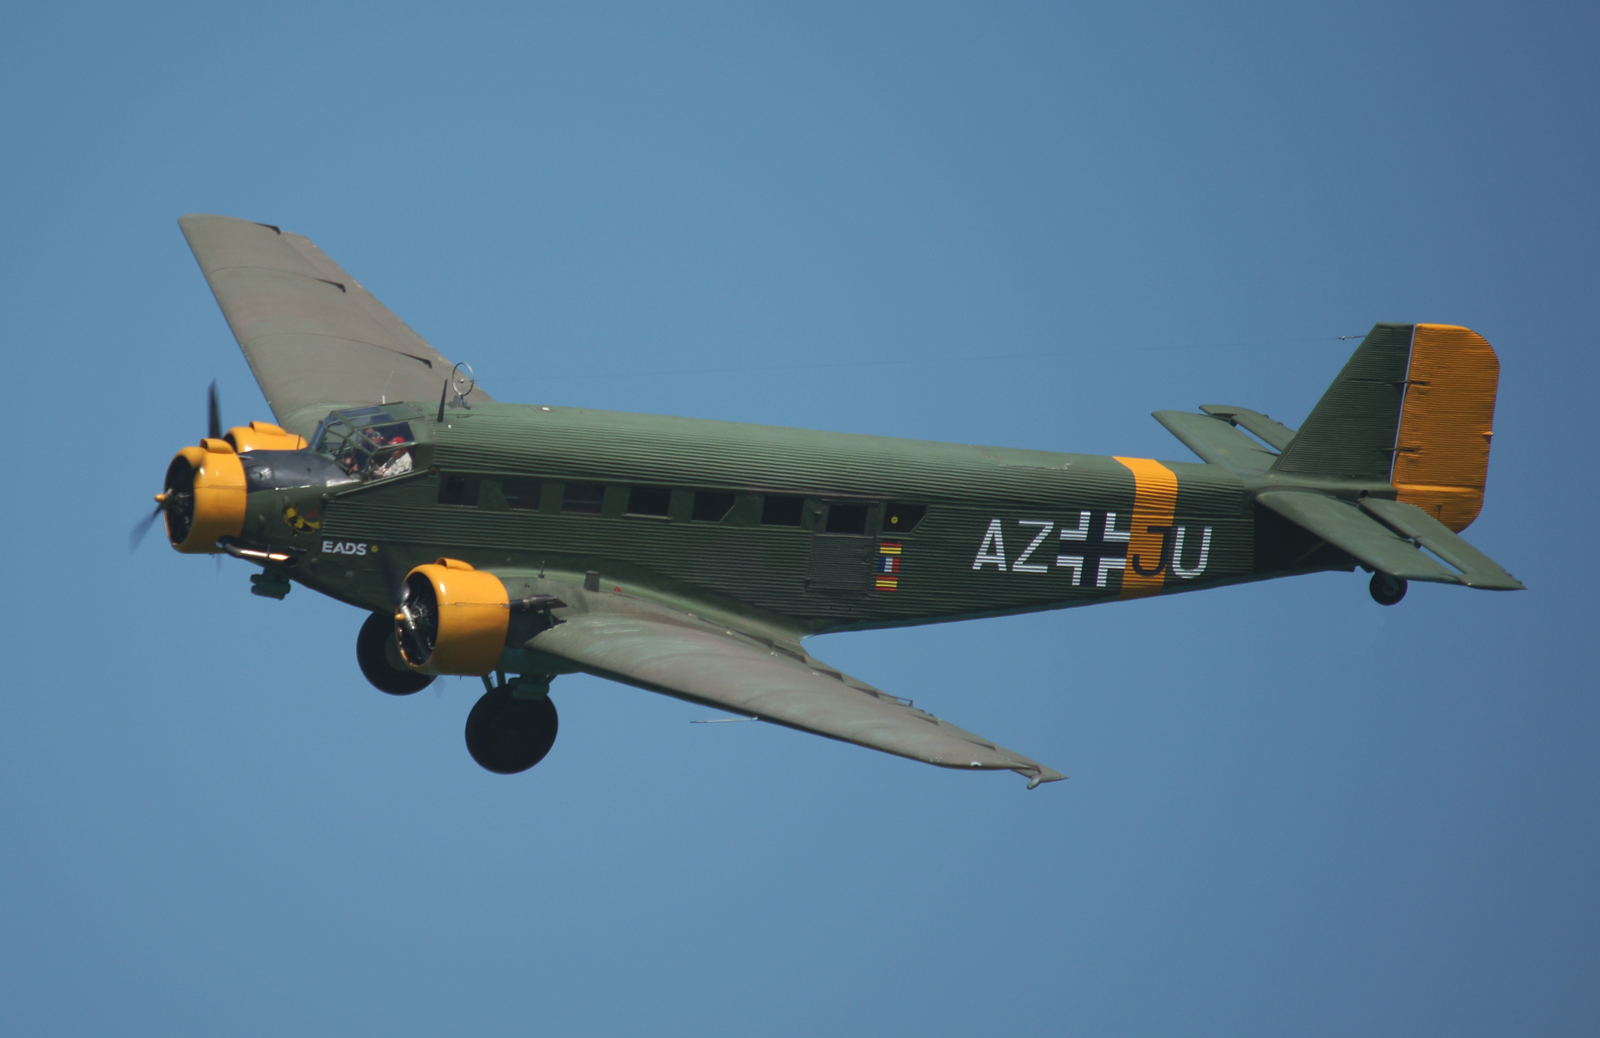 Junkers Ju 52 HD wallpapers, Desktop wallpaper - most viewed